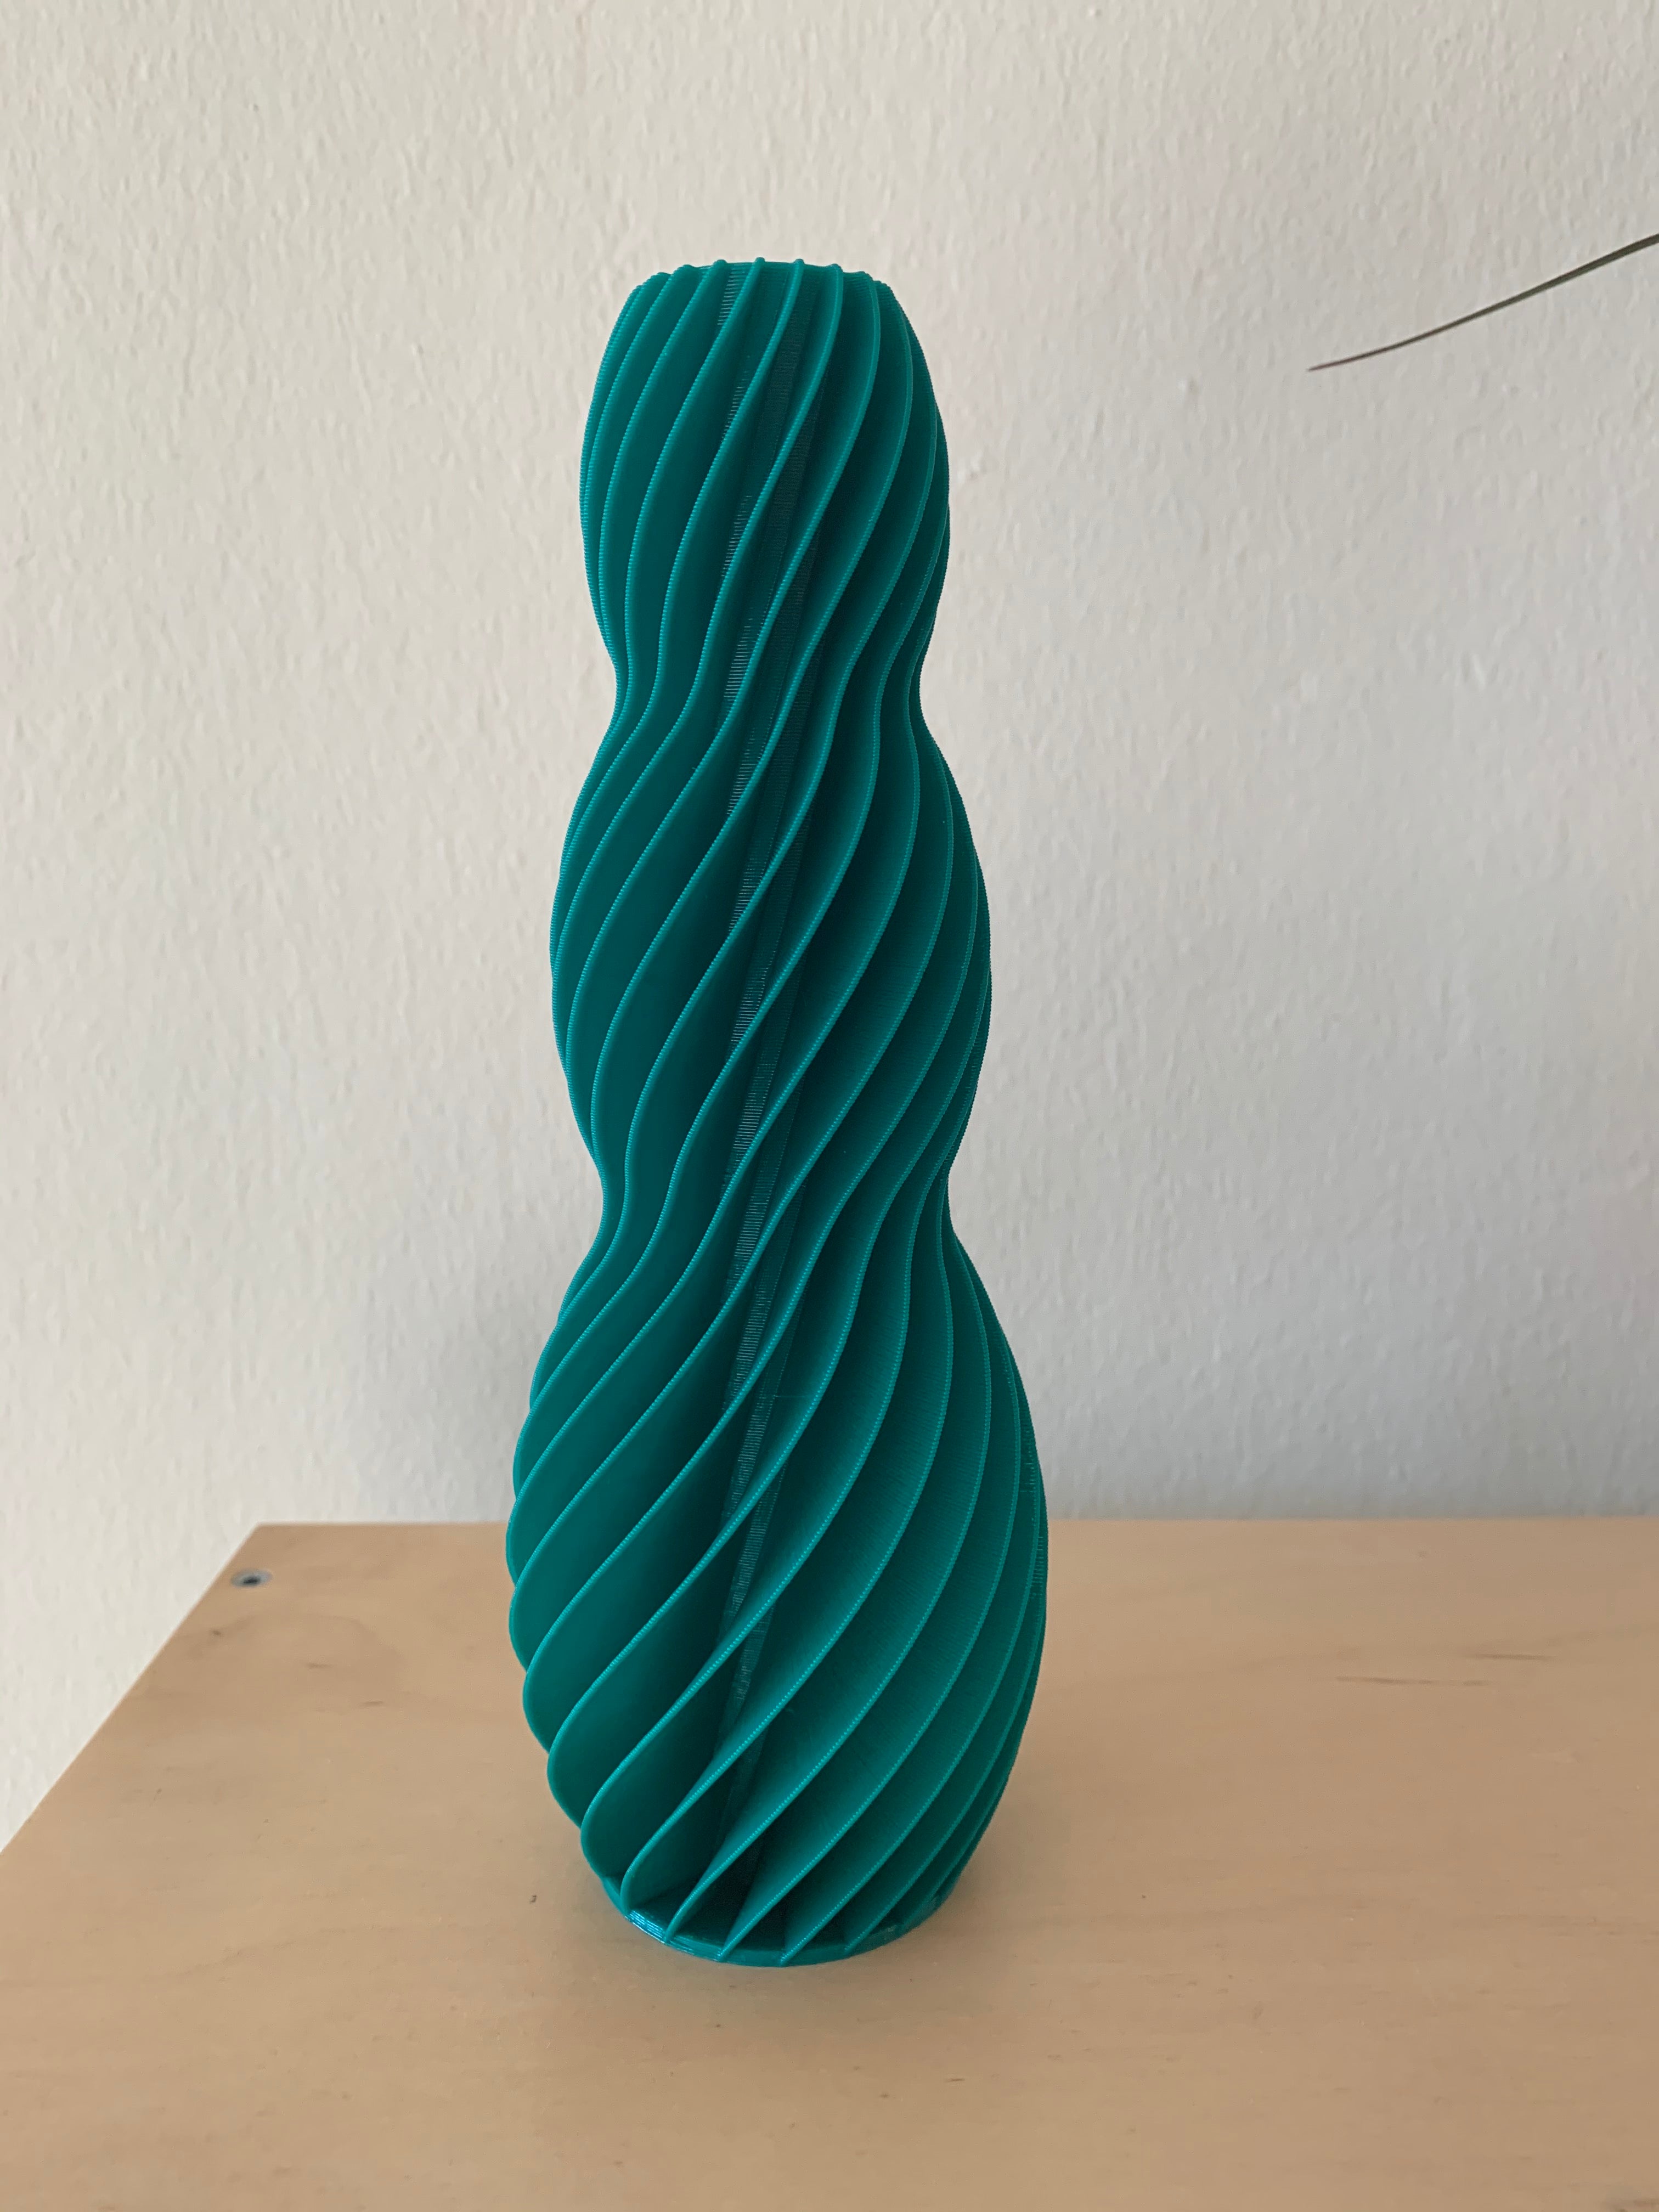 Green Spiral Vase